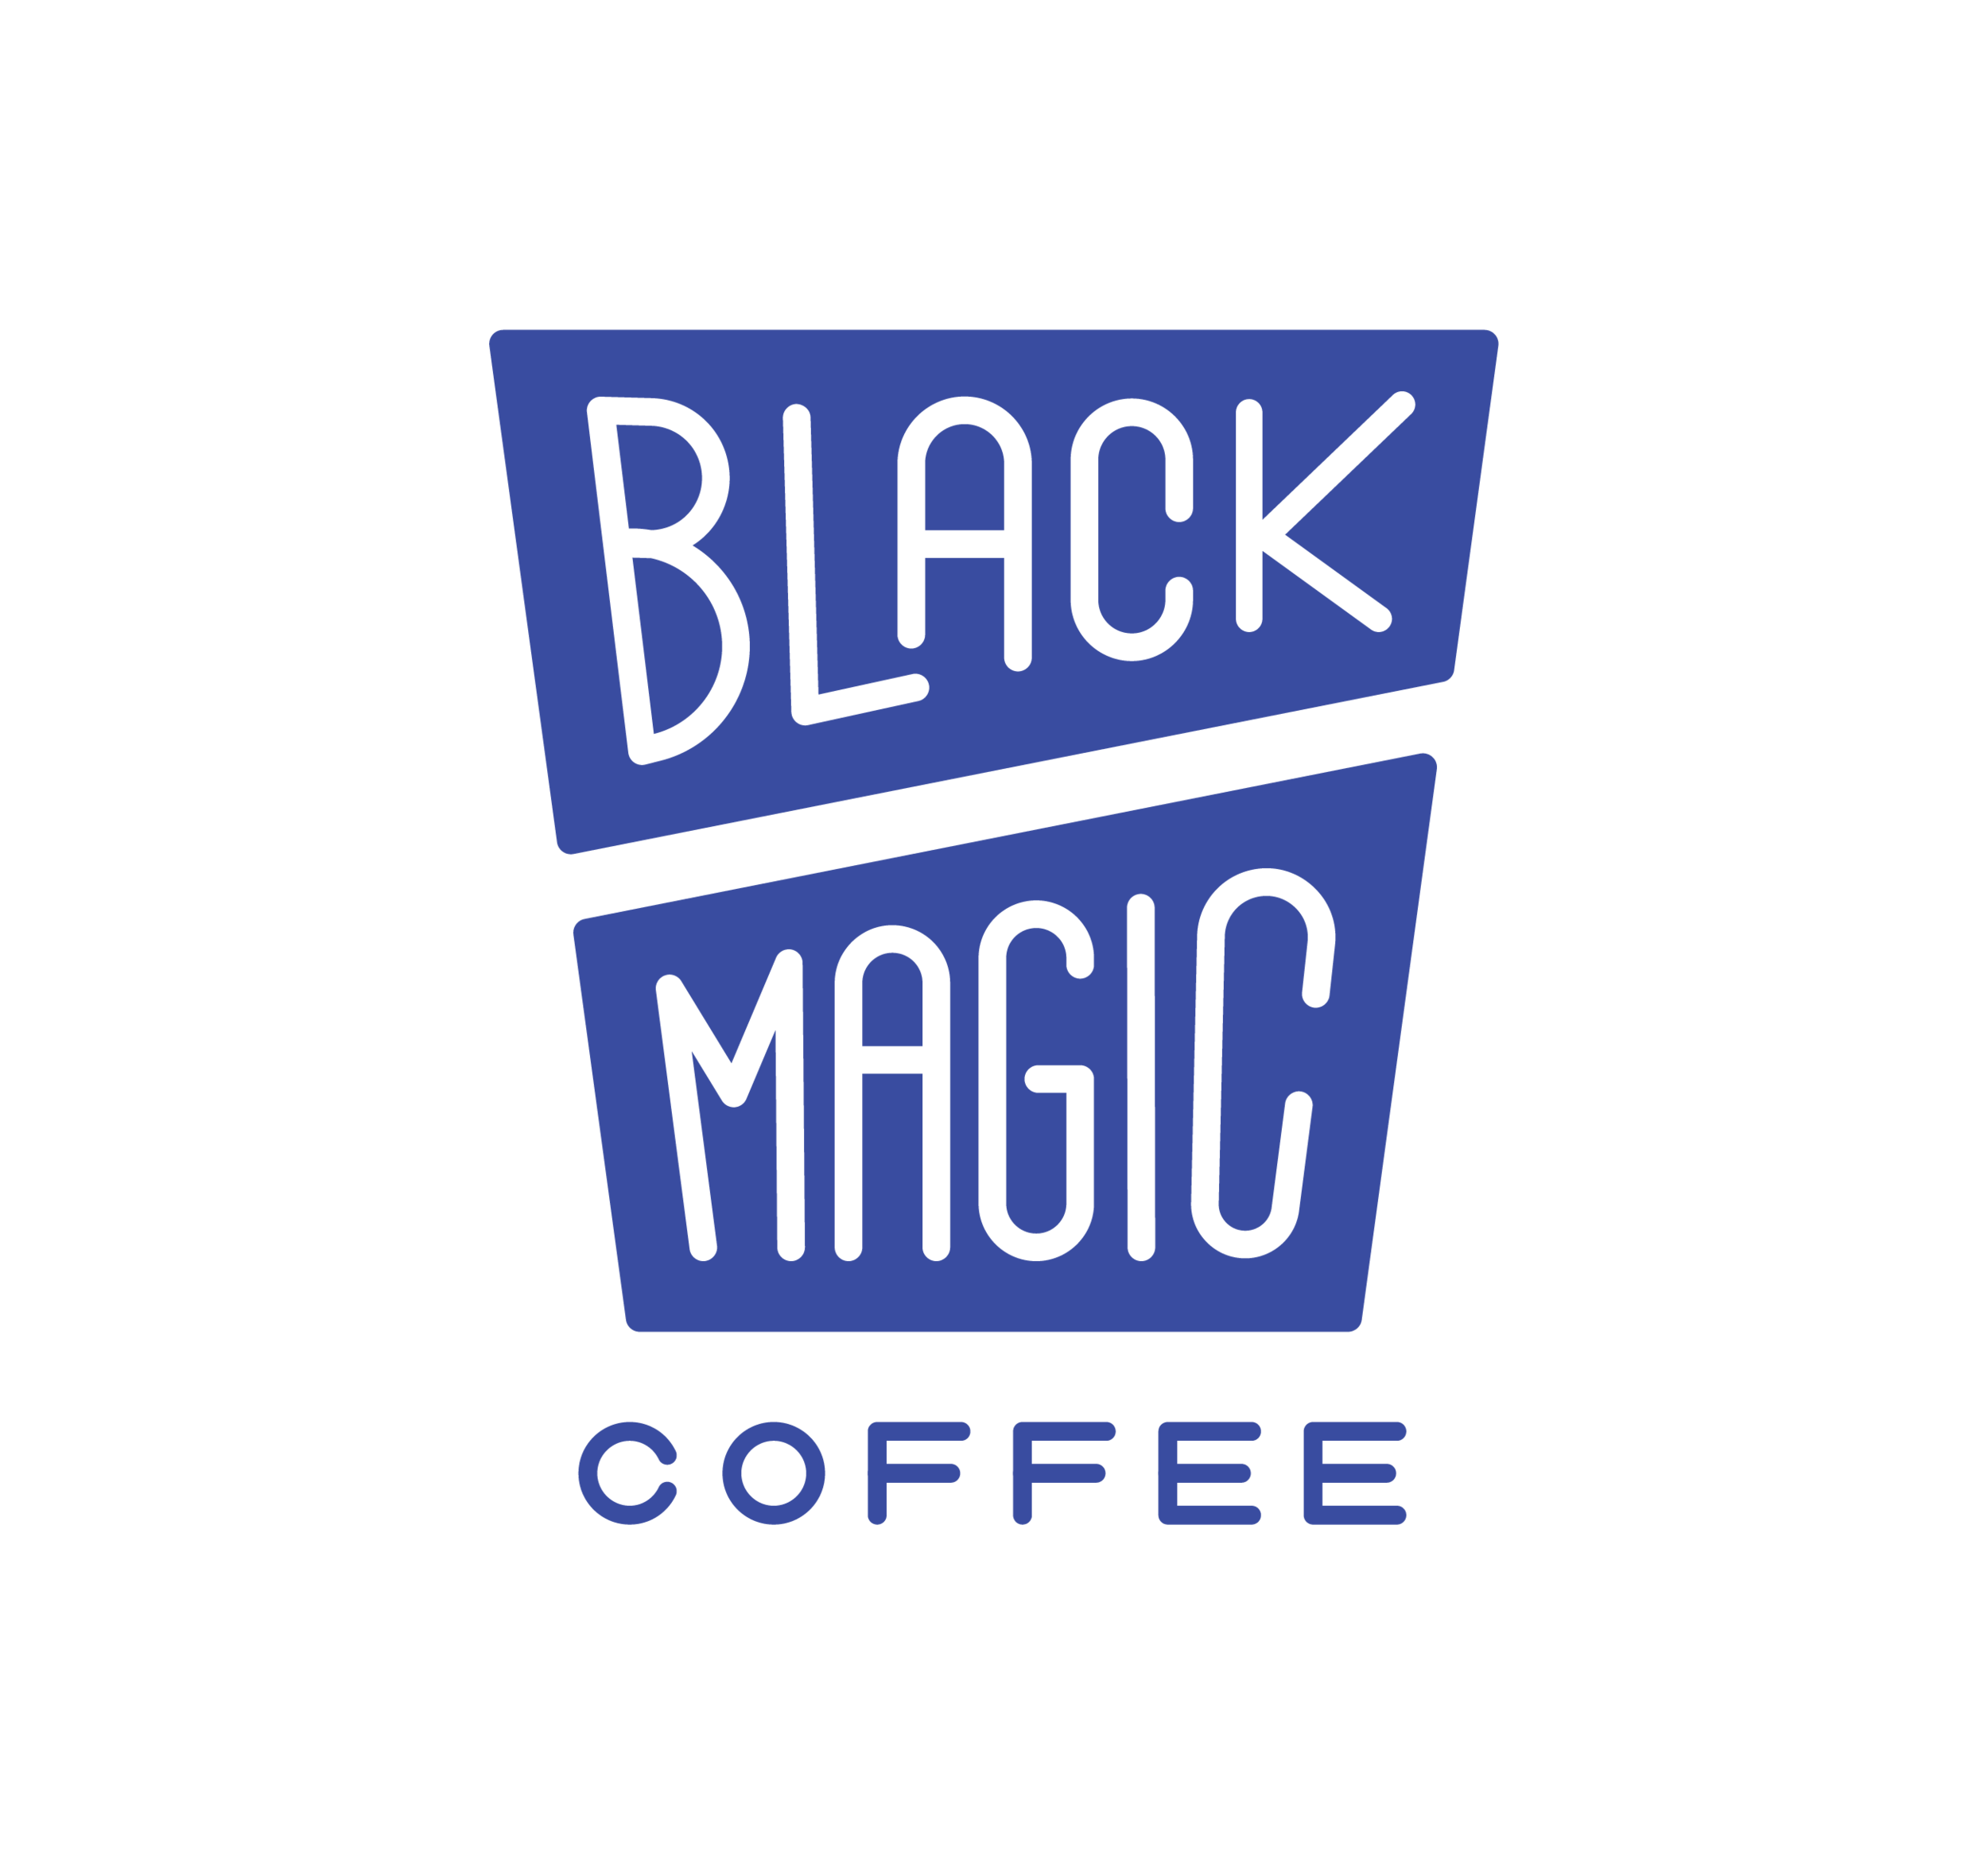 J. Creative Black Magic Coffee